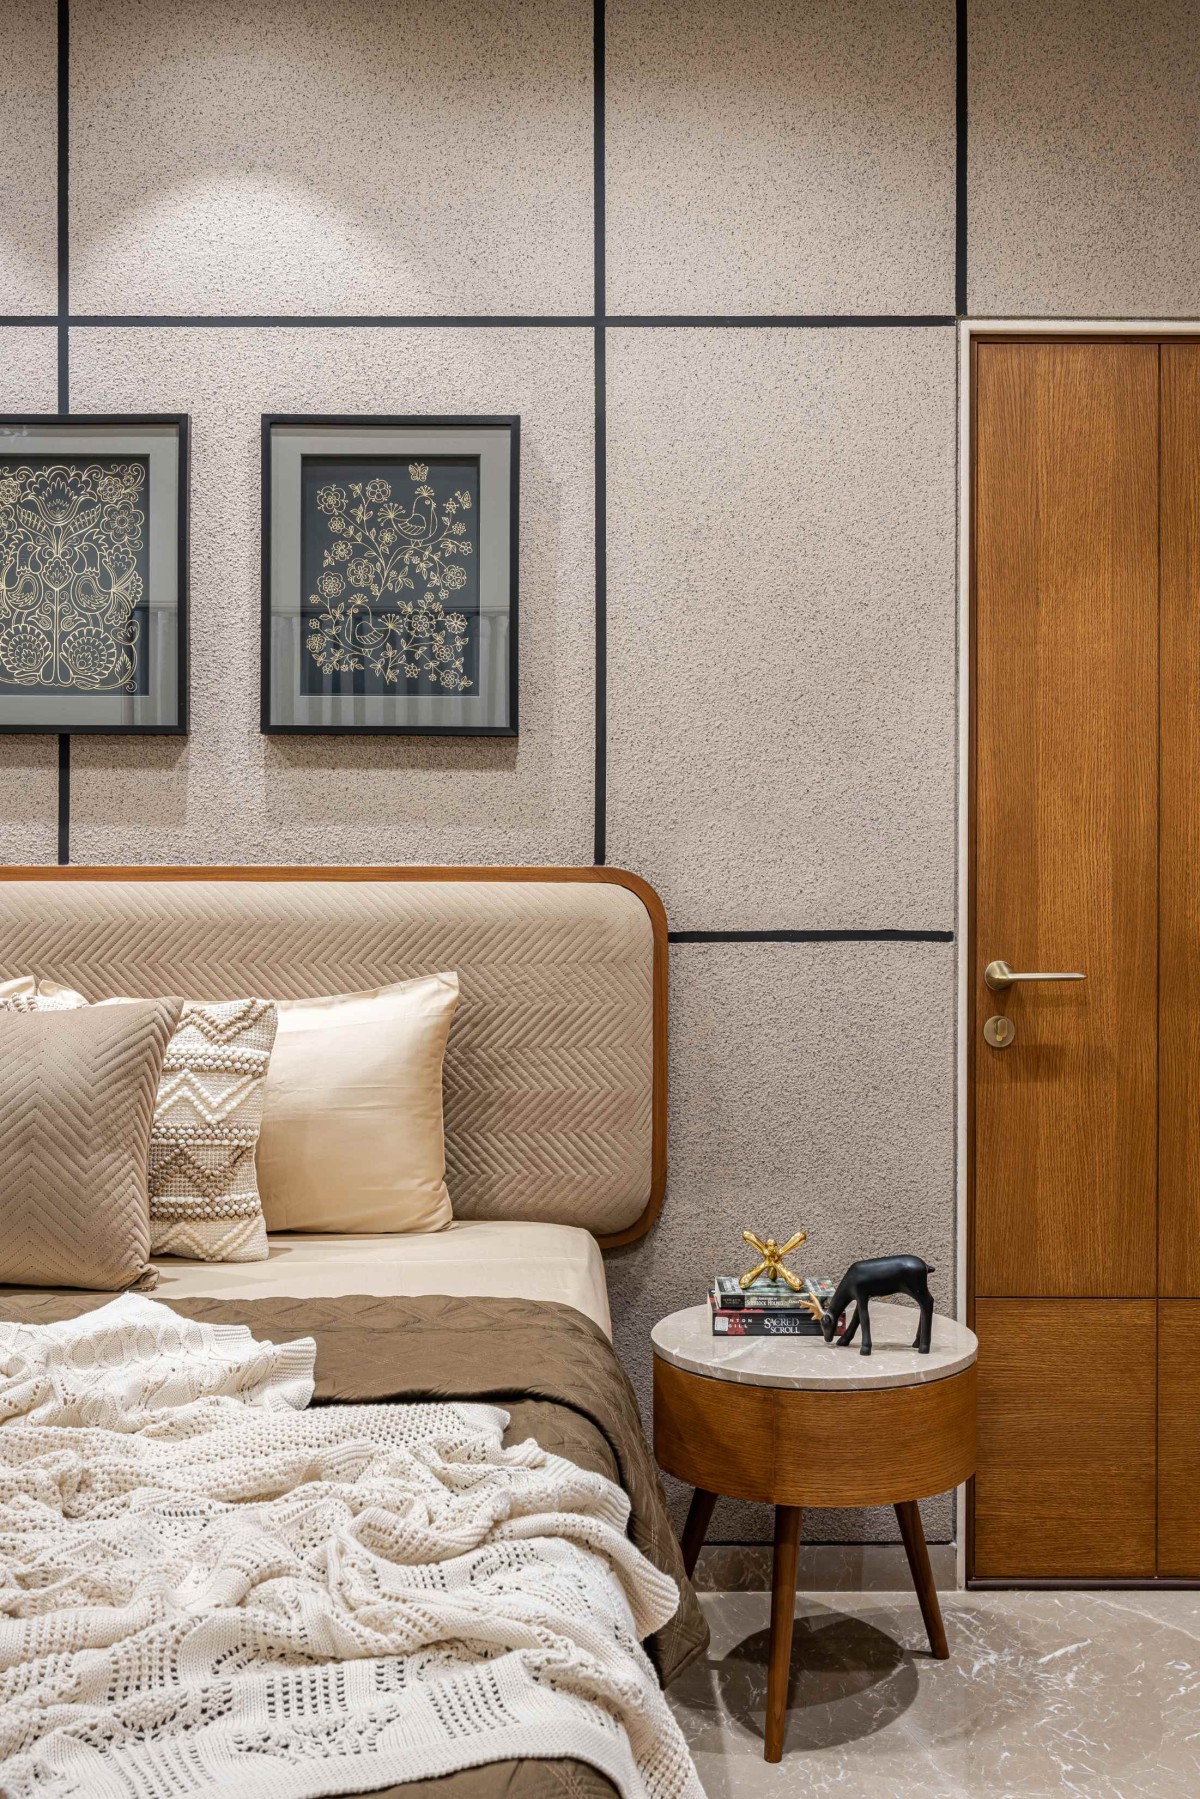 Guest Bedroom of The Quaint Bungalow by Design Salt Studio